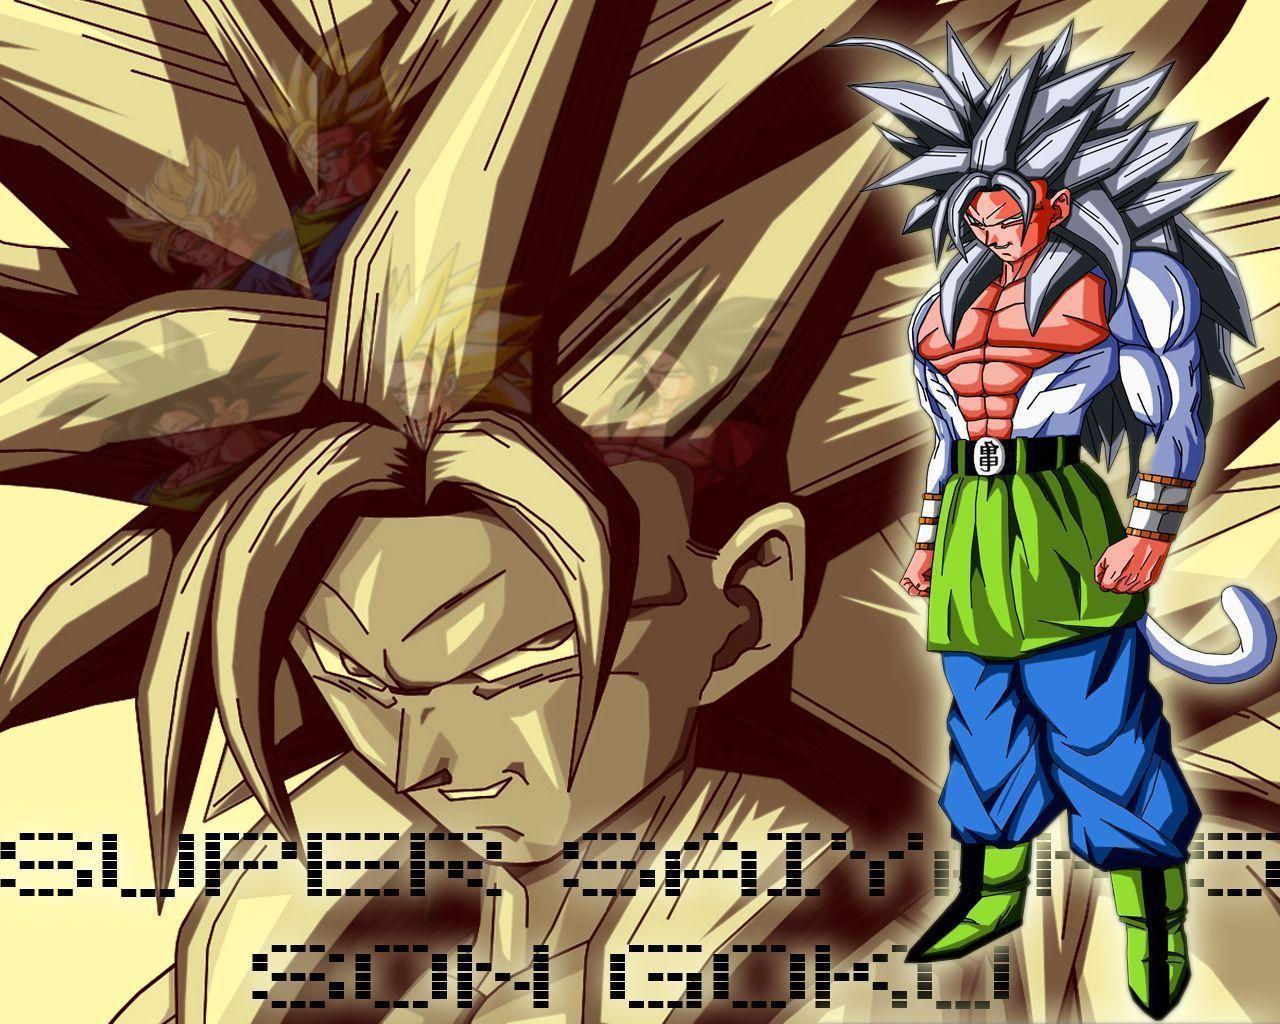 image For > Dbz Wallpaper Goku Ss5